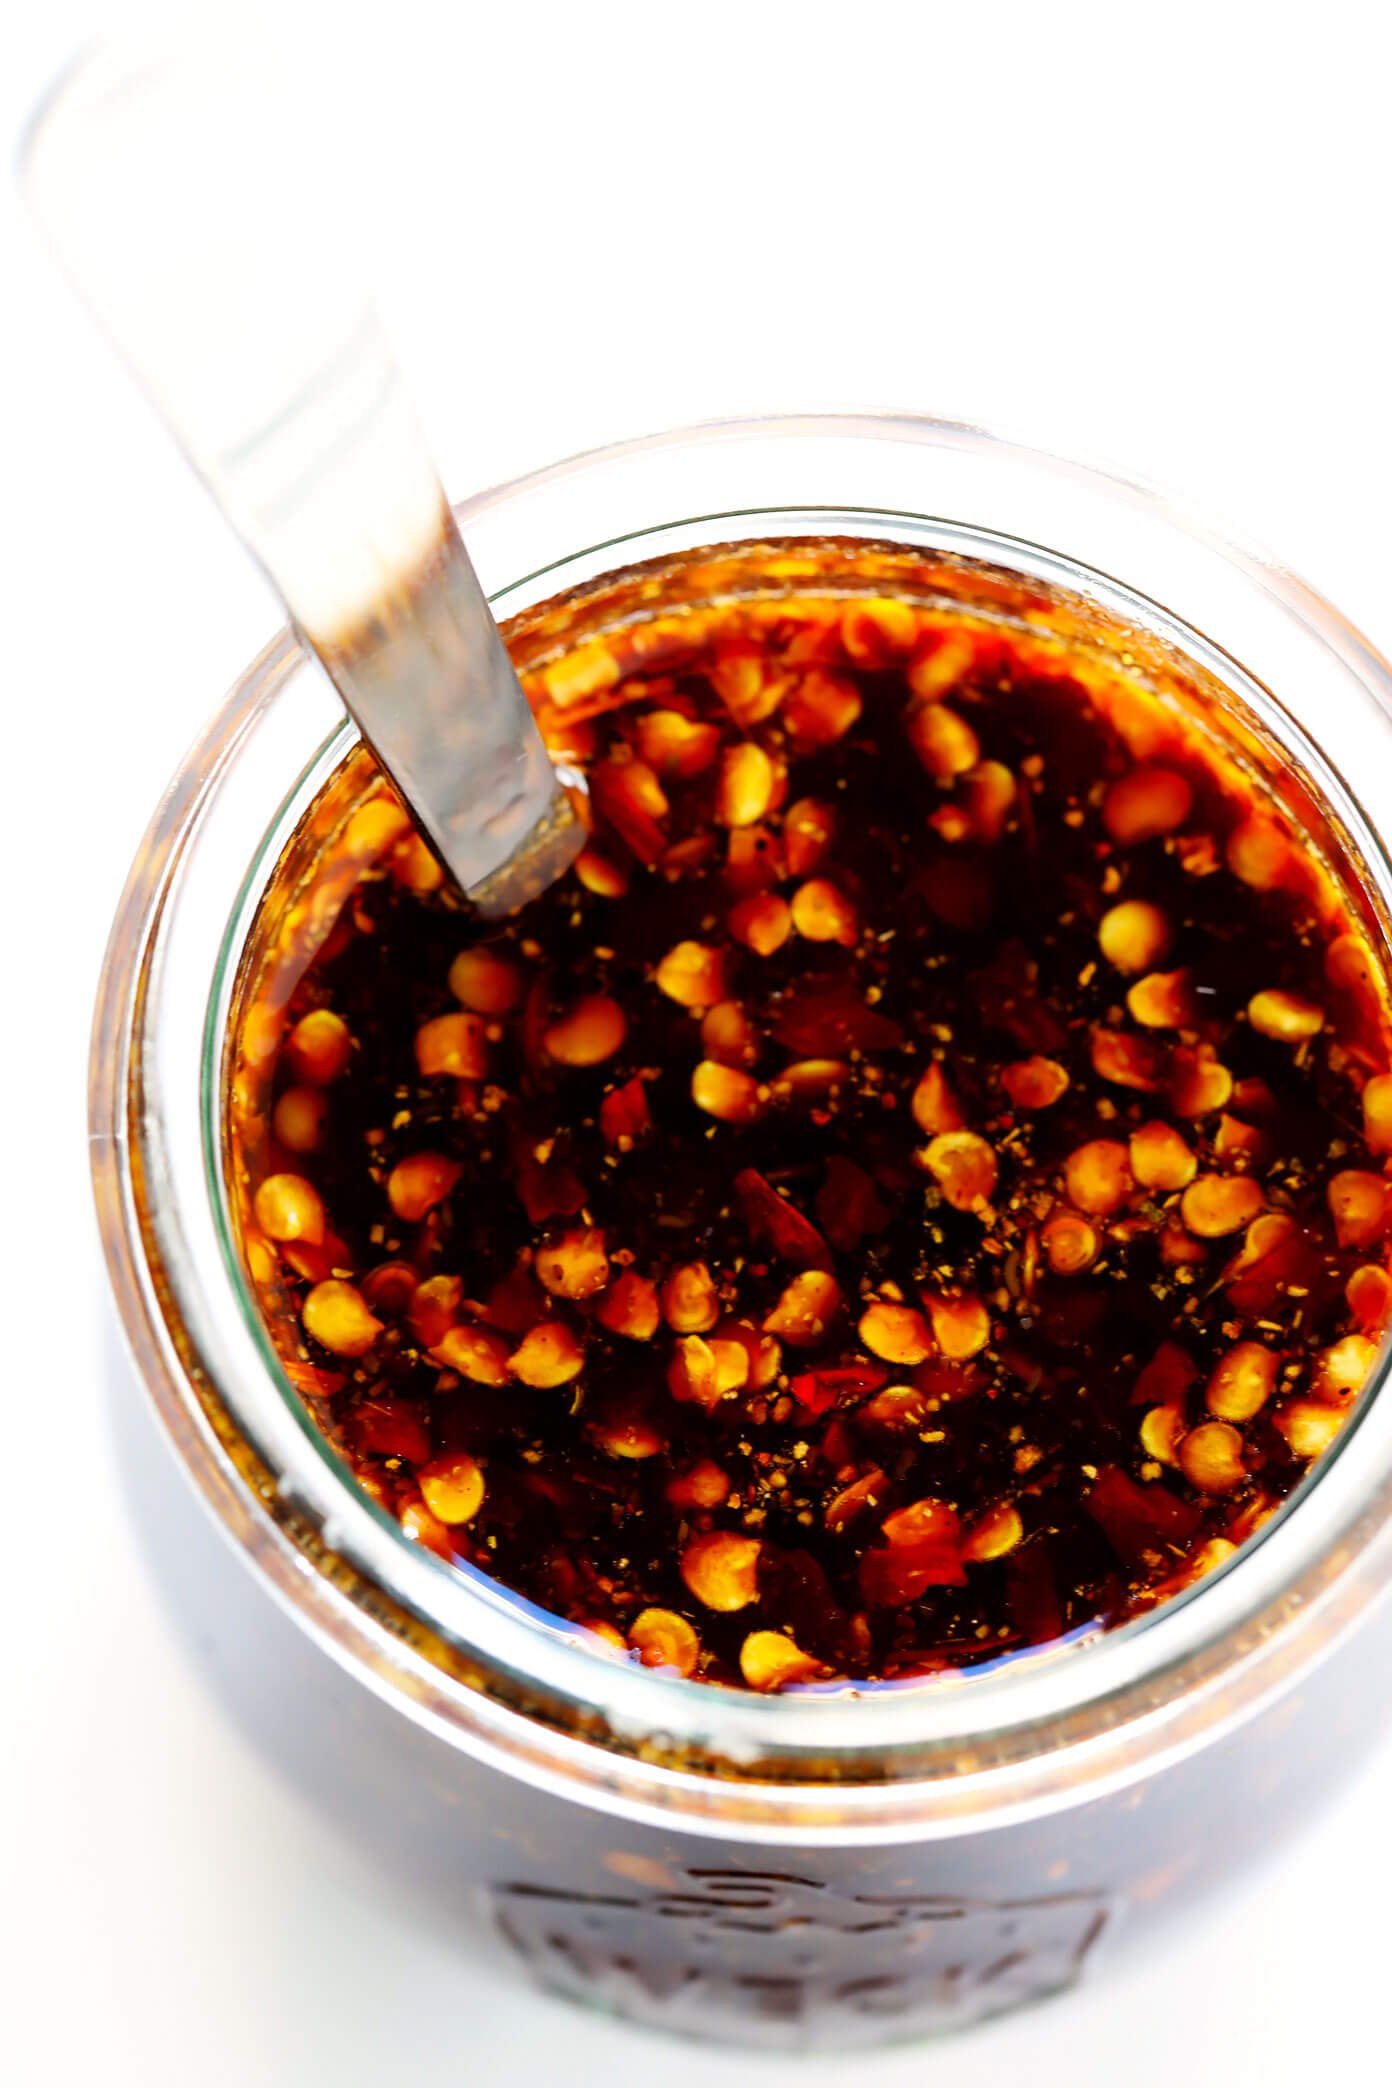 5-Minute Szechuan Sauce Recipe